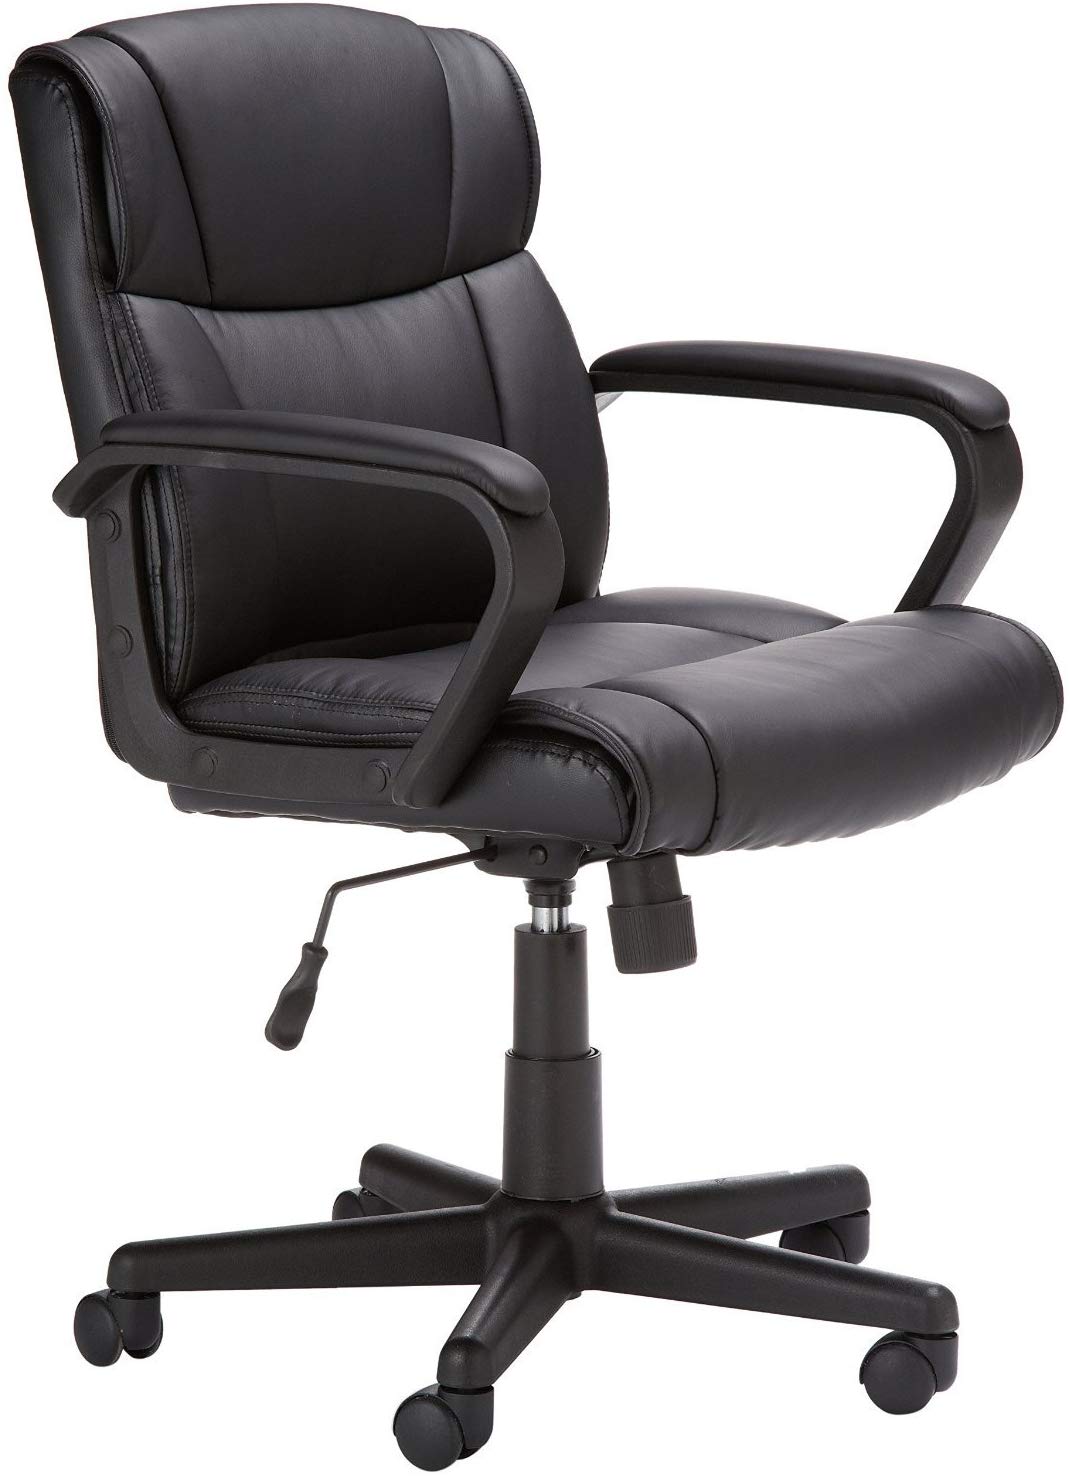 Amazon Basics Classic Leather Office Desk Chair